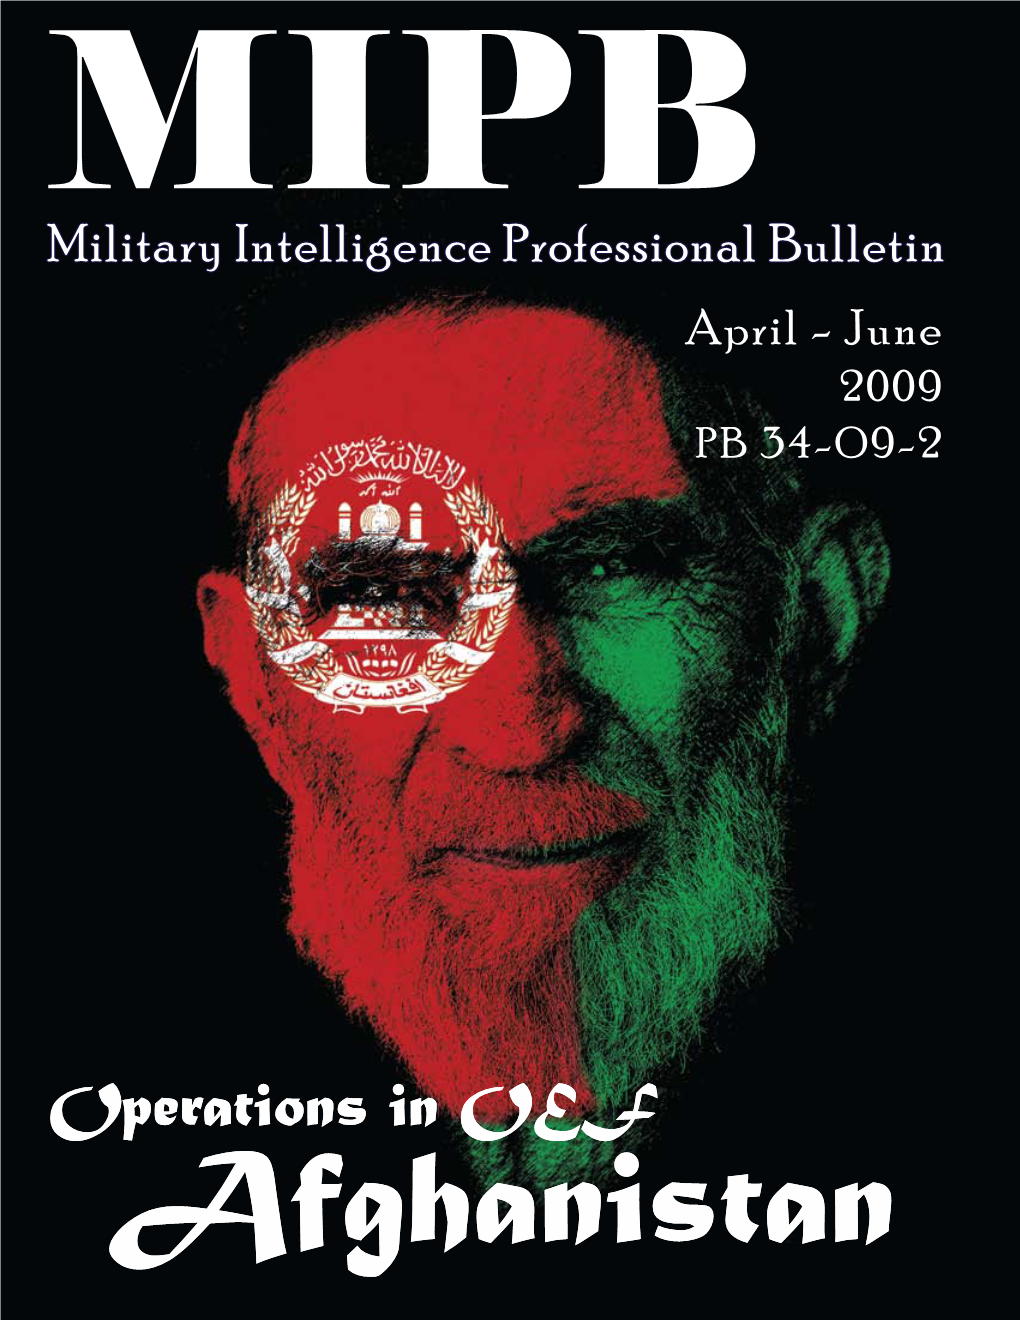 MILITARY INTELLIGENCE PB 34-09-2 Volume 35 Number 2 April - June 2009